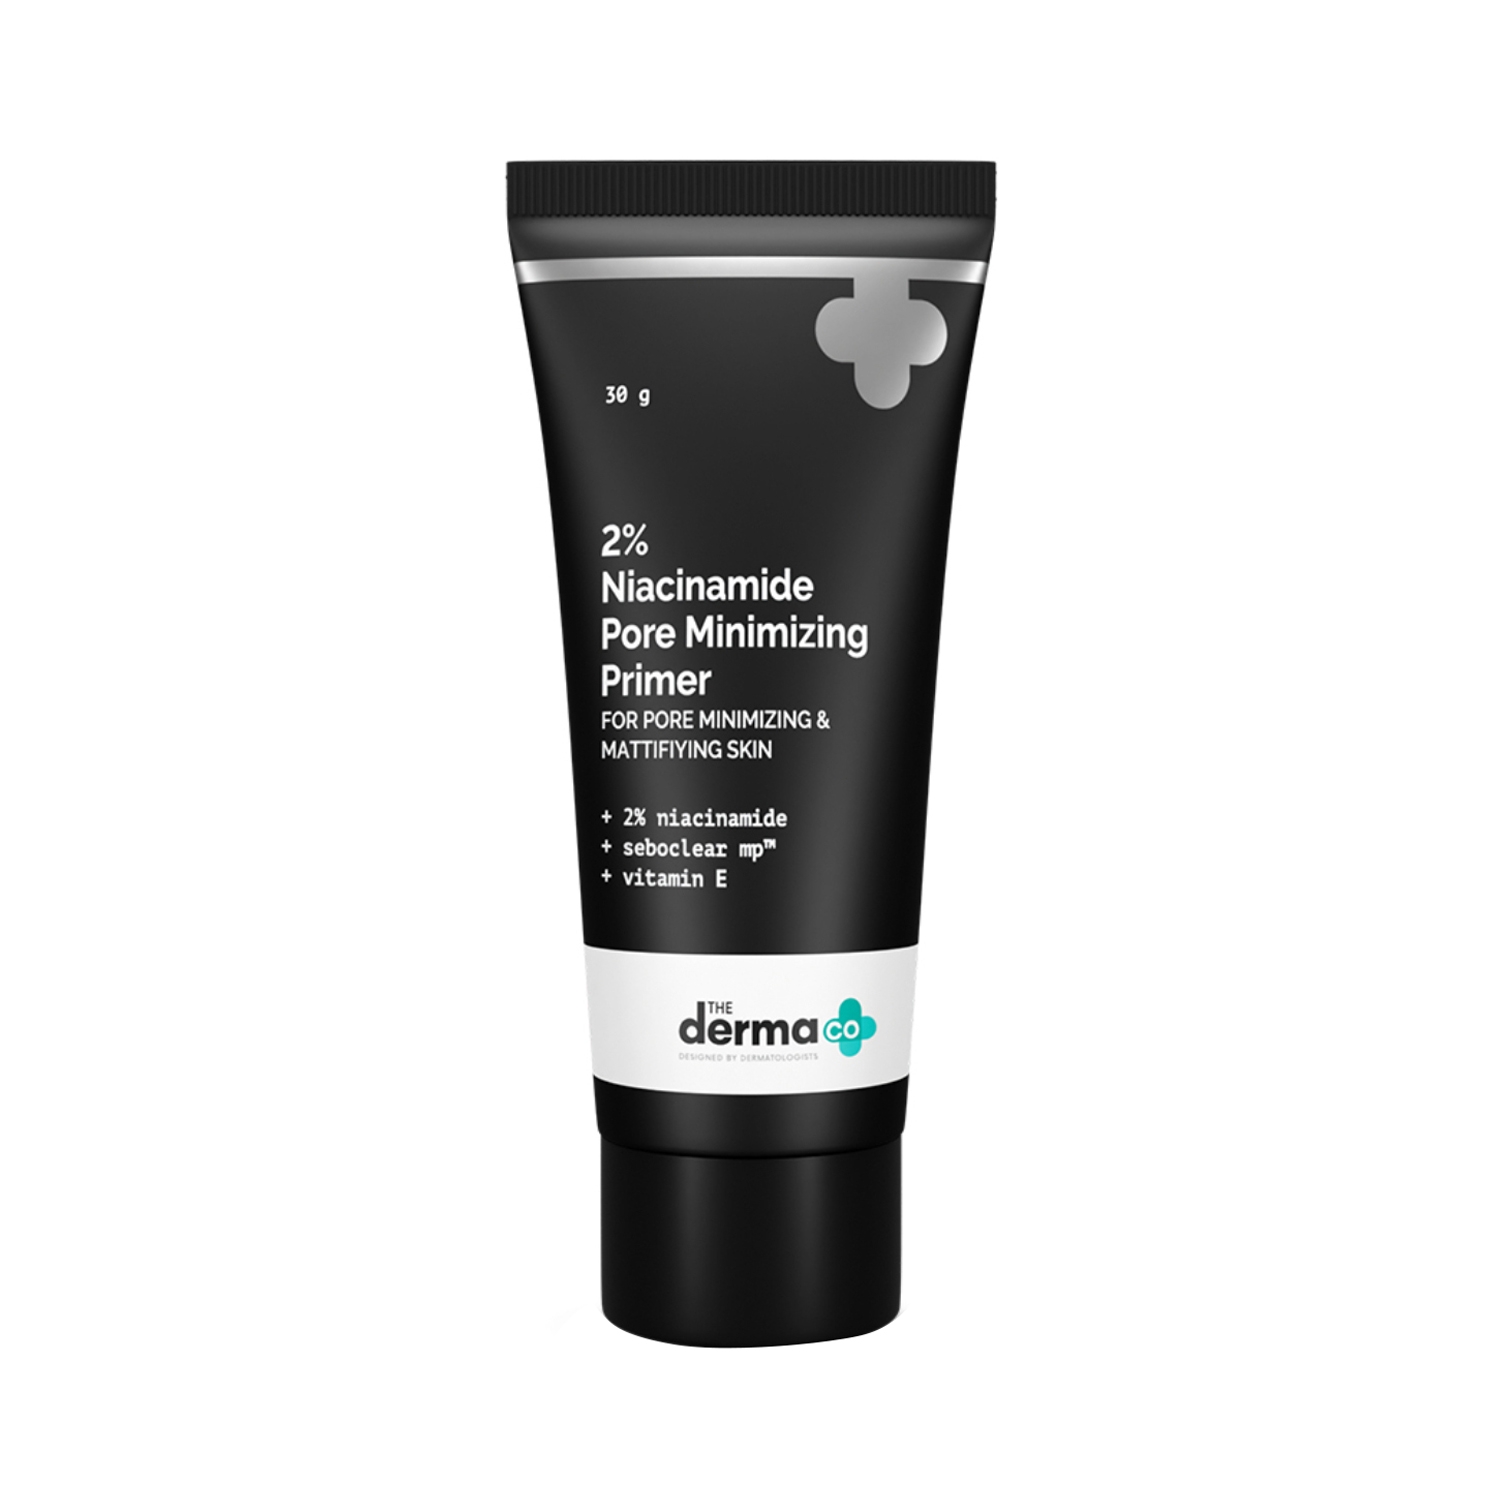 The Derma Co | The Derma Co 2% Niacinamide Pore Minimizing Primer (30g)